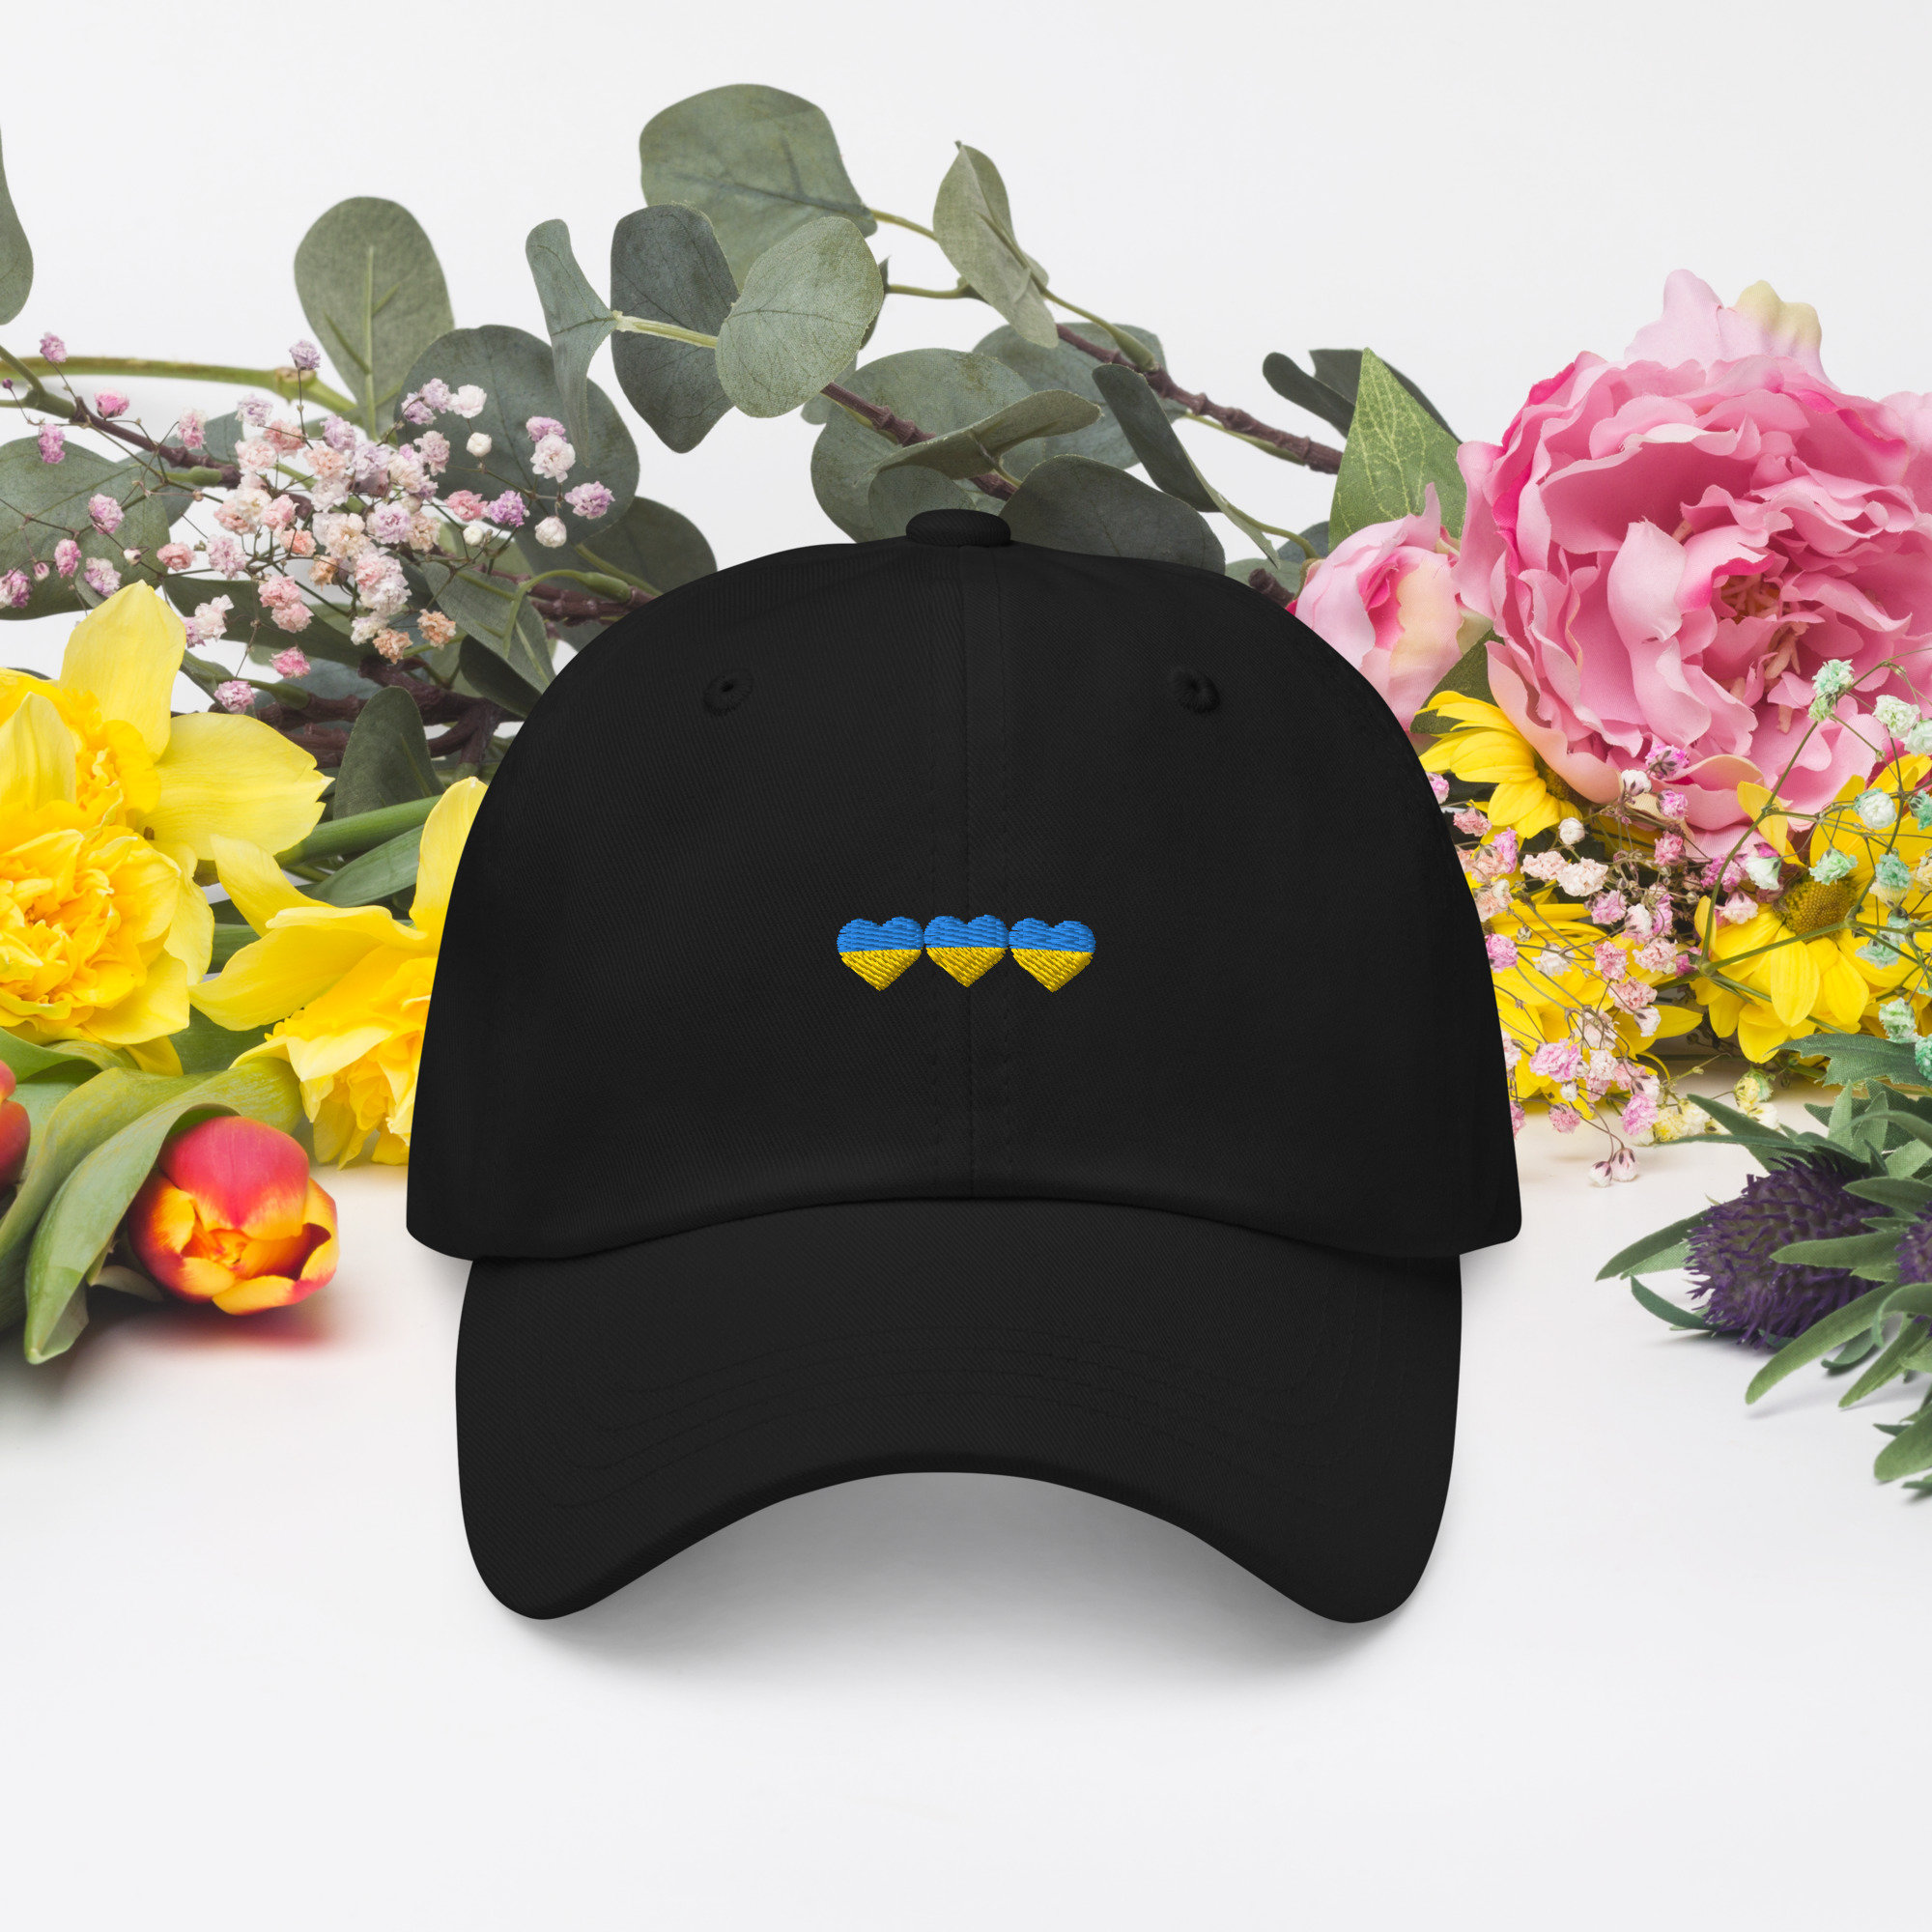 Ukraine Flag Support Protest War In Embroidered Hat